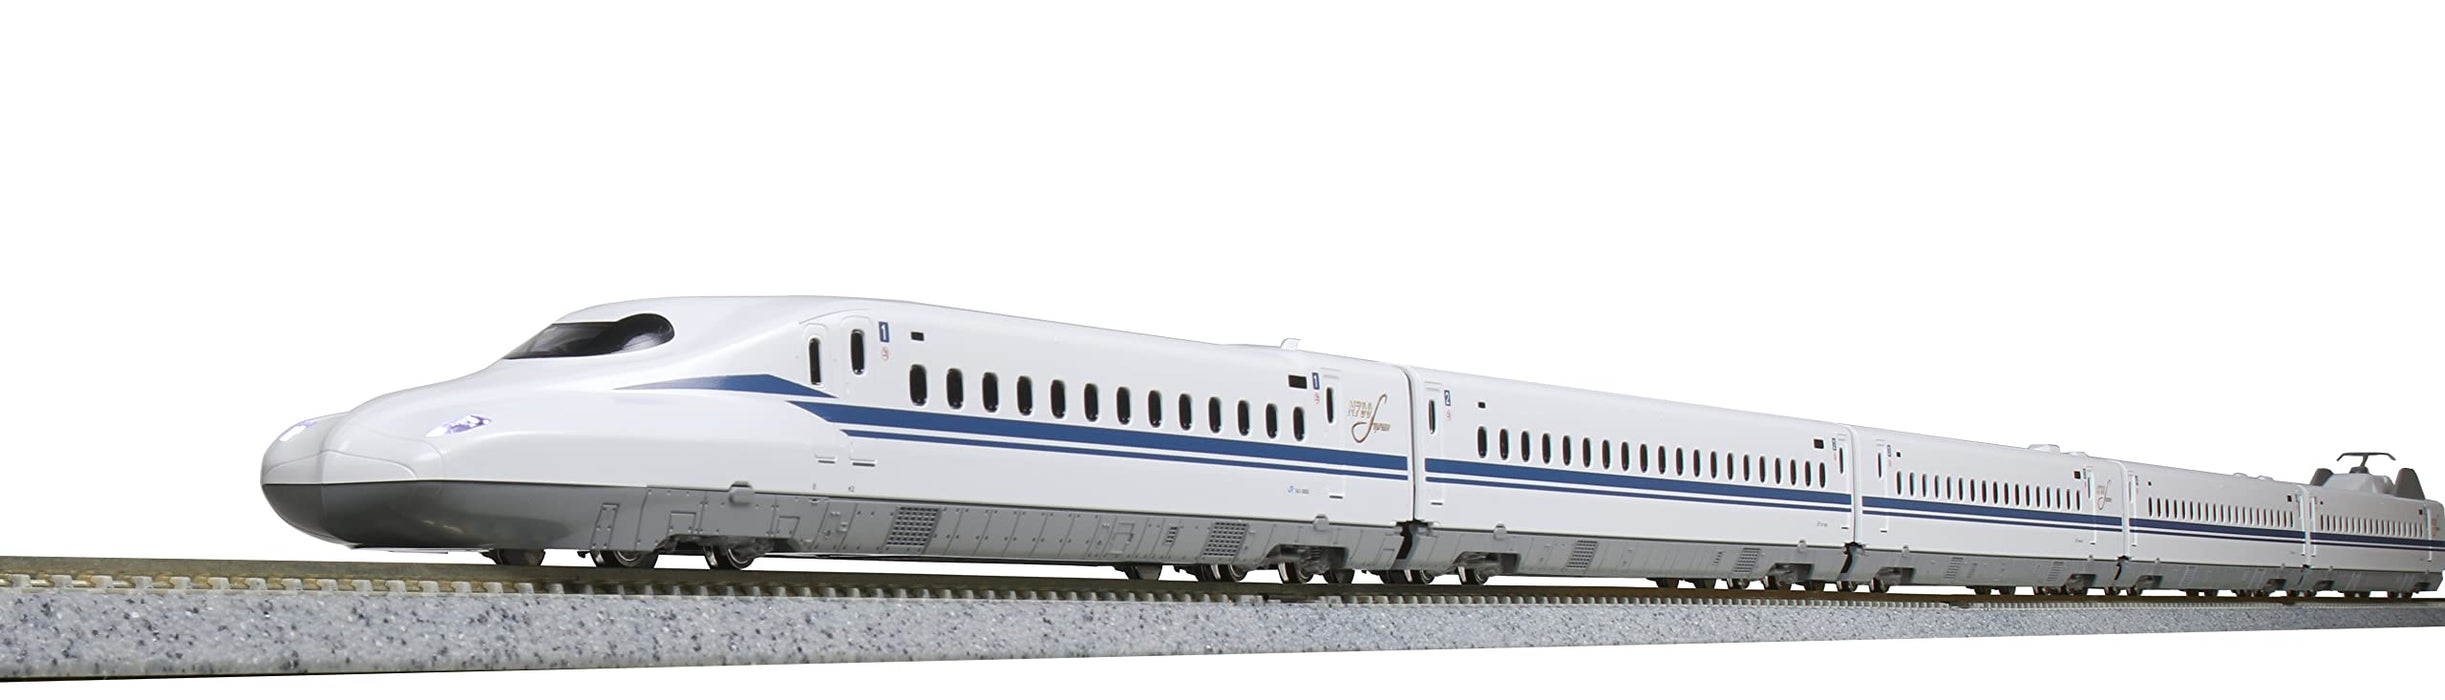 Kato N700S 3000 Series Shinkansen Nozomi 16-Car Train Set - N Gauge 10-1742 Railway Model